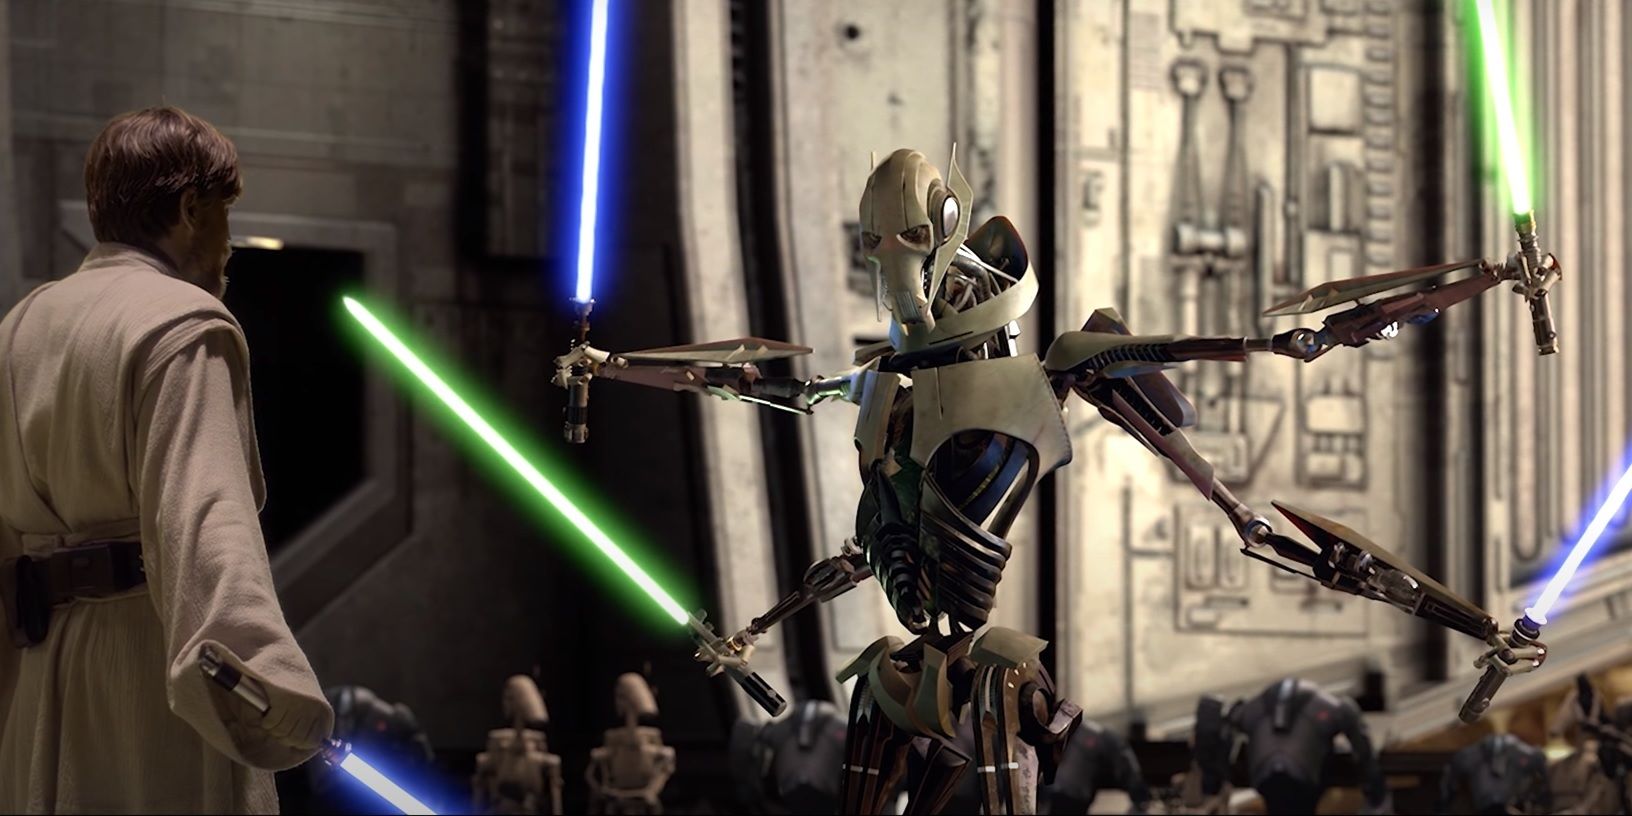 General Grievous attacking Obi-Wan Kenobi with four lightsabers in Star Wars Episode III: The Phantom Menace